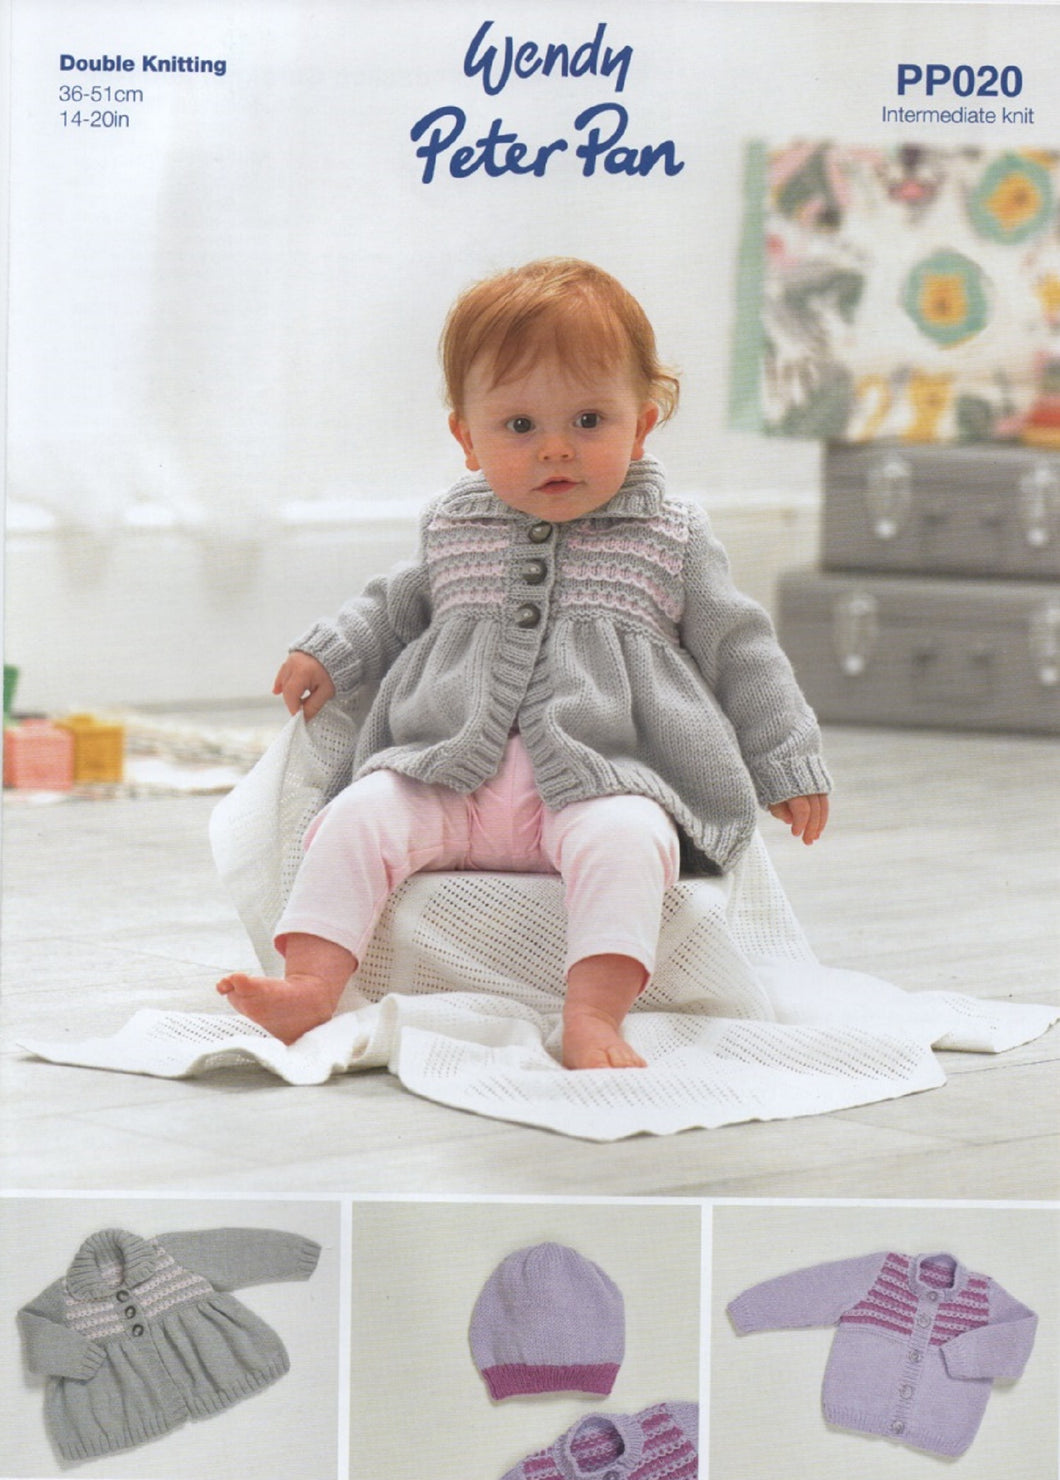 Wendy Peter Pan Baby Double Knitting Pattern - Cardigan Hat & Jacket (PP020)